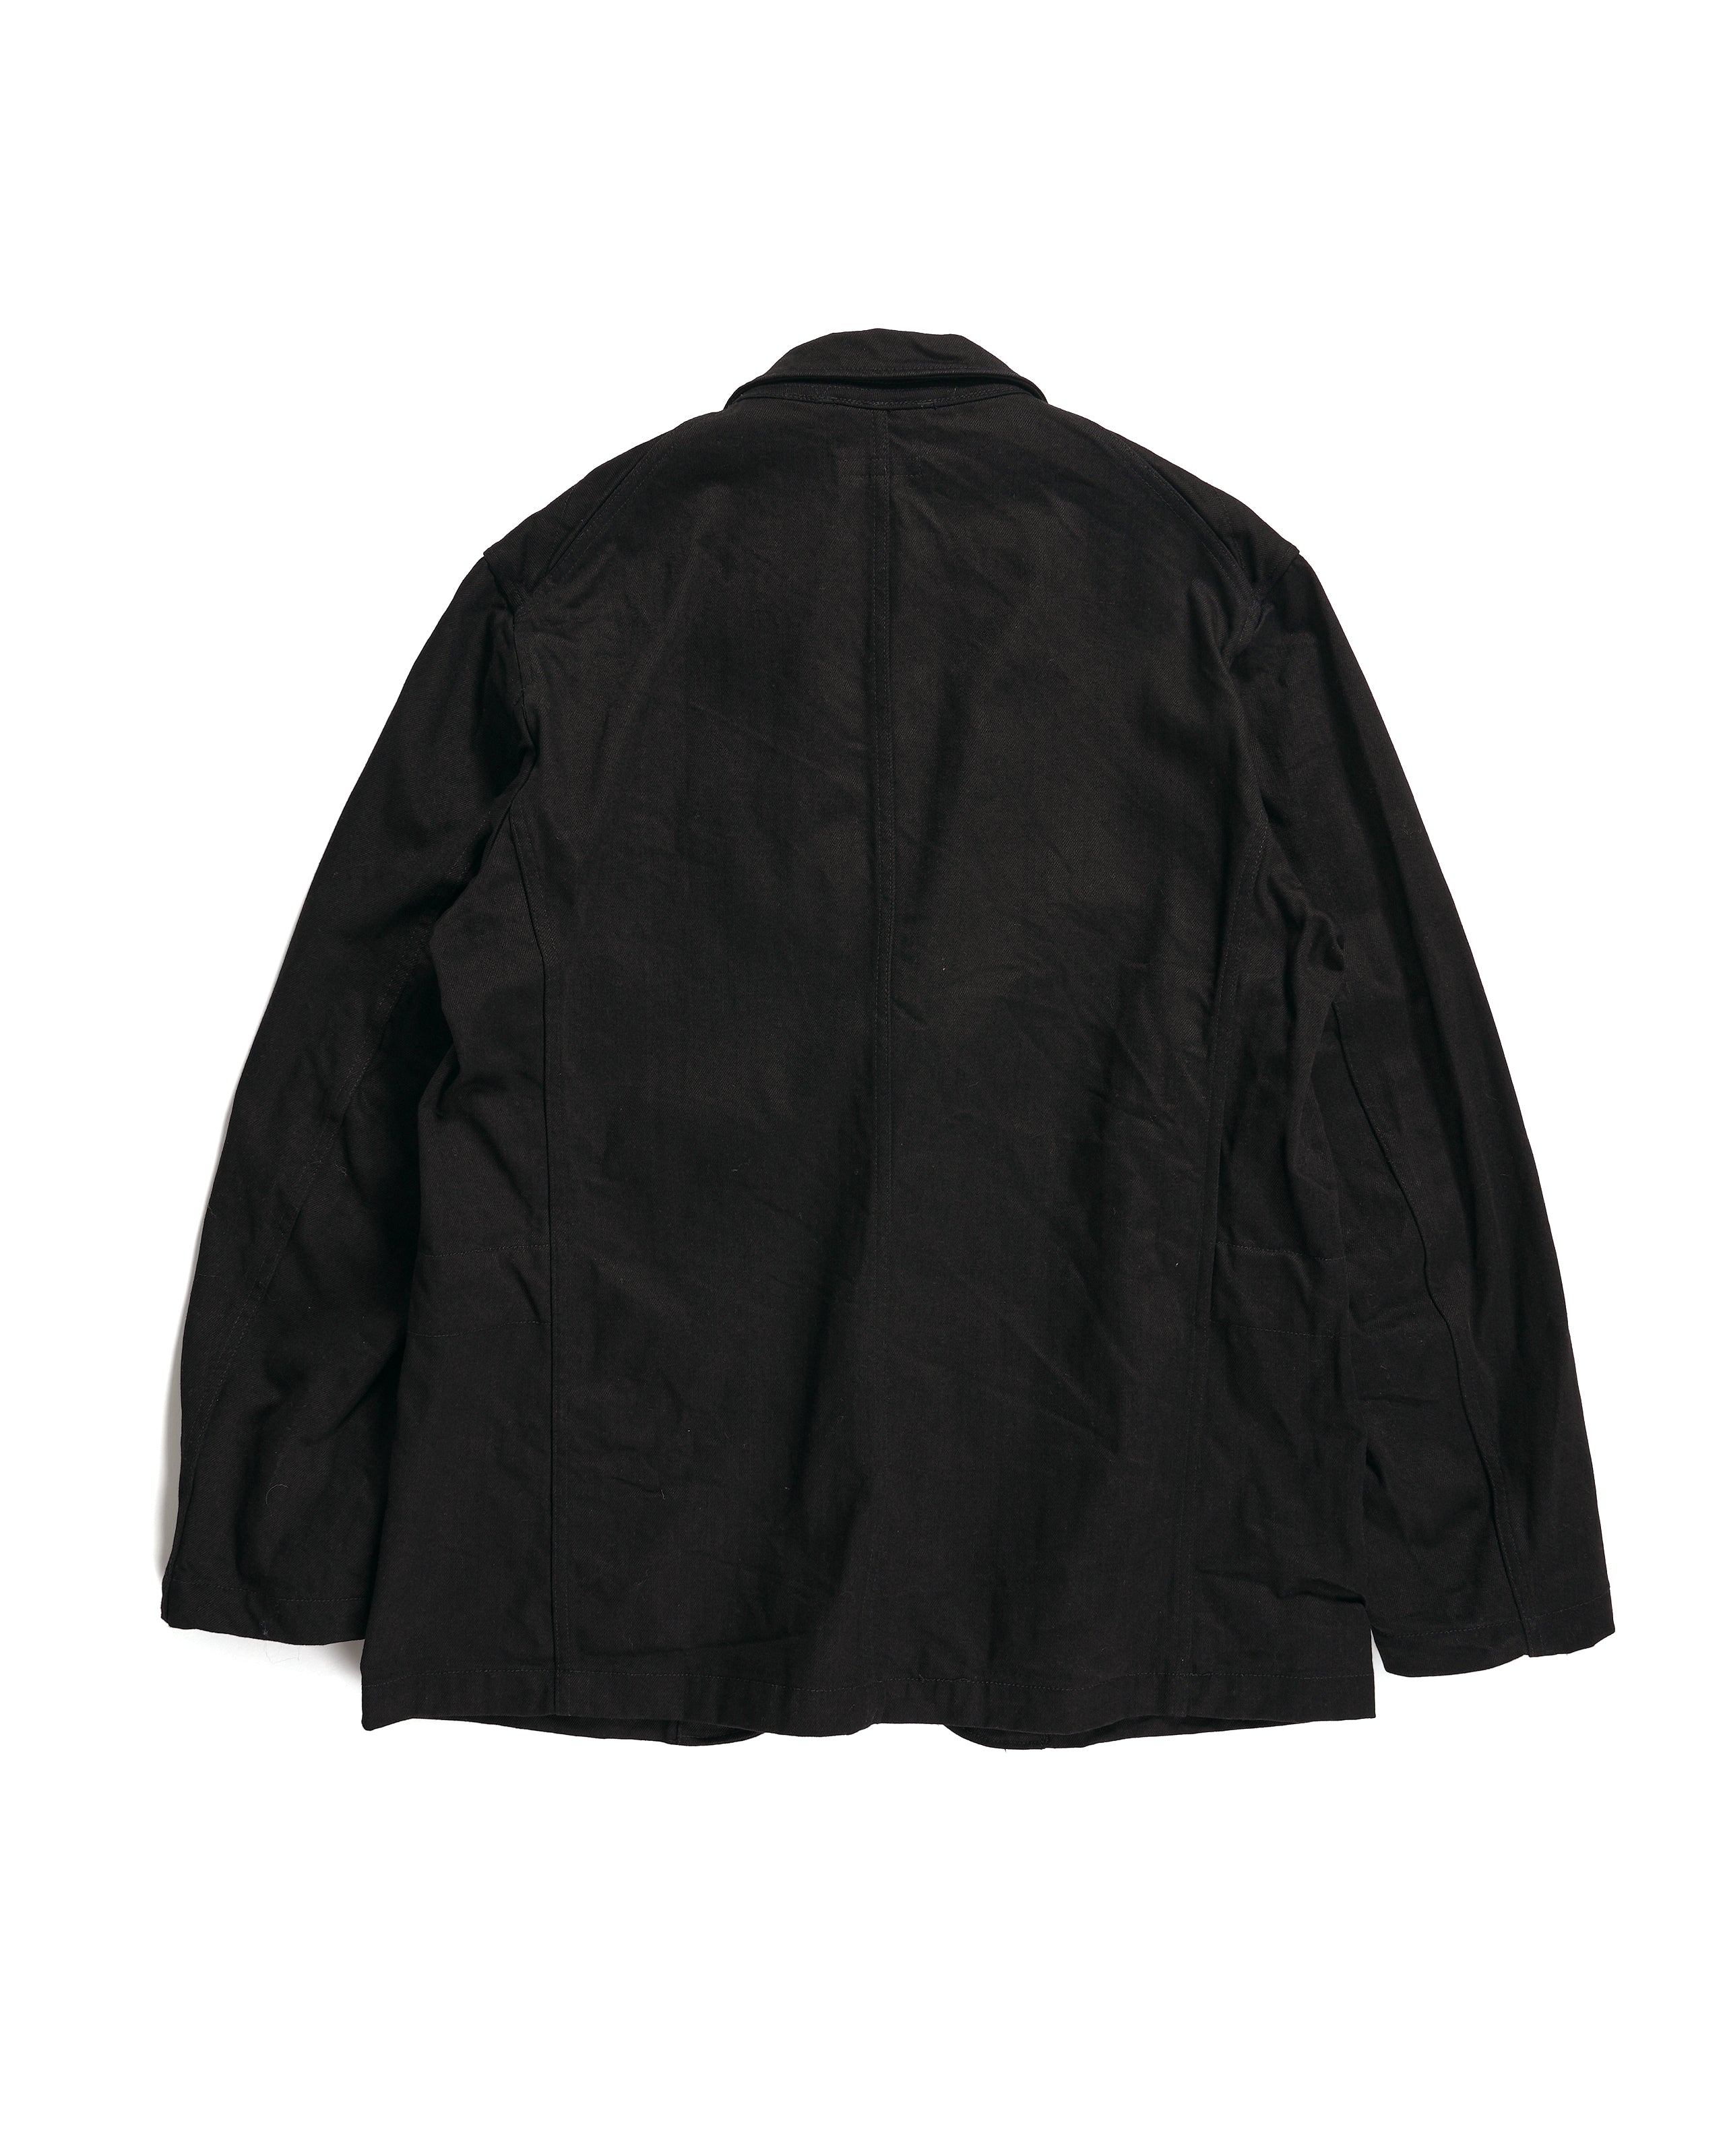 Bedford Jacket - Black Cotton Bull Denim